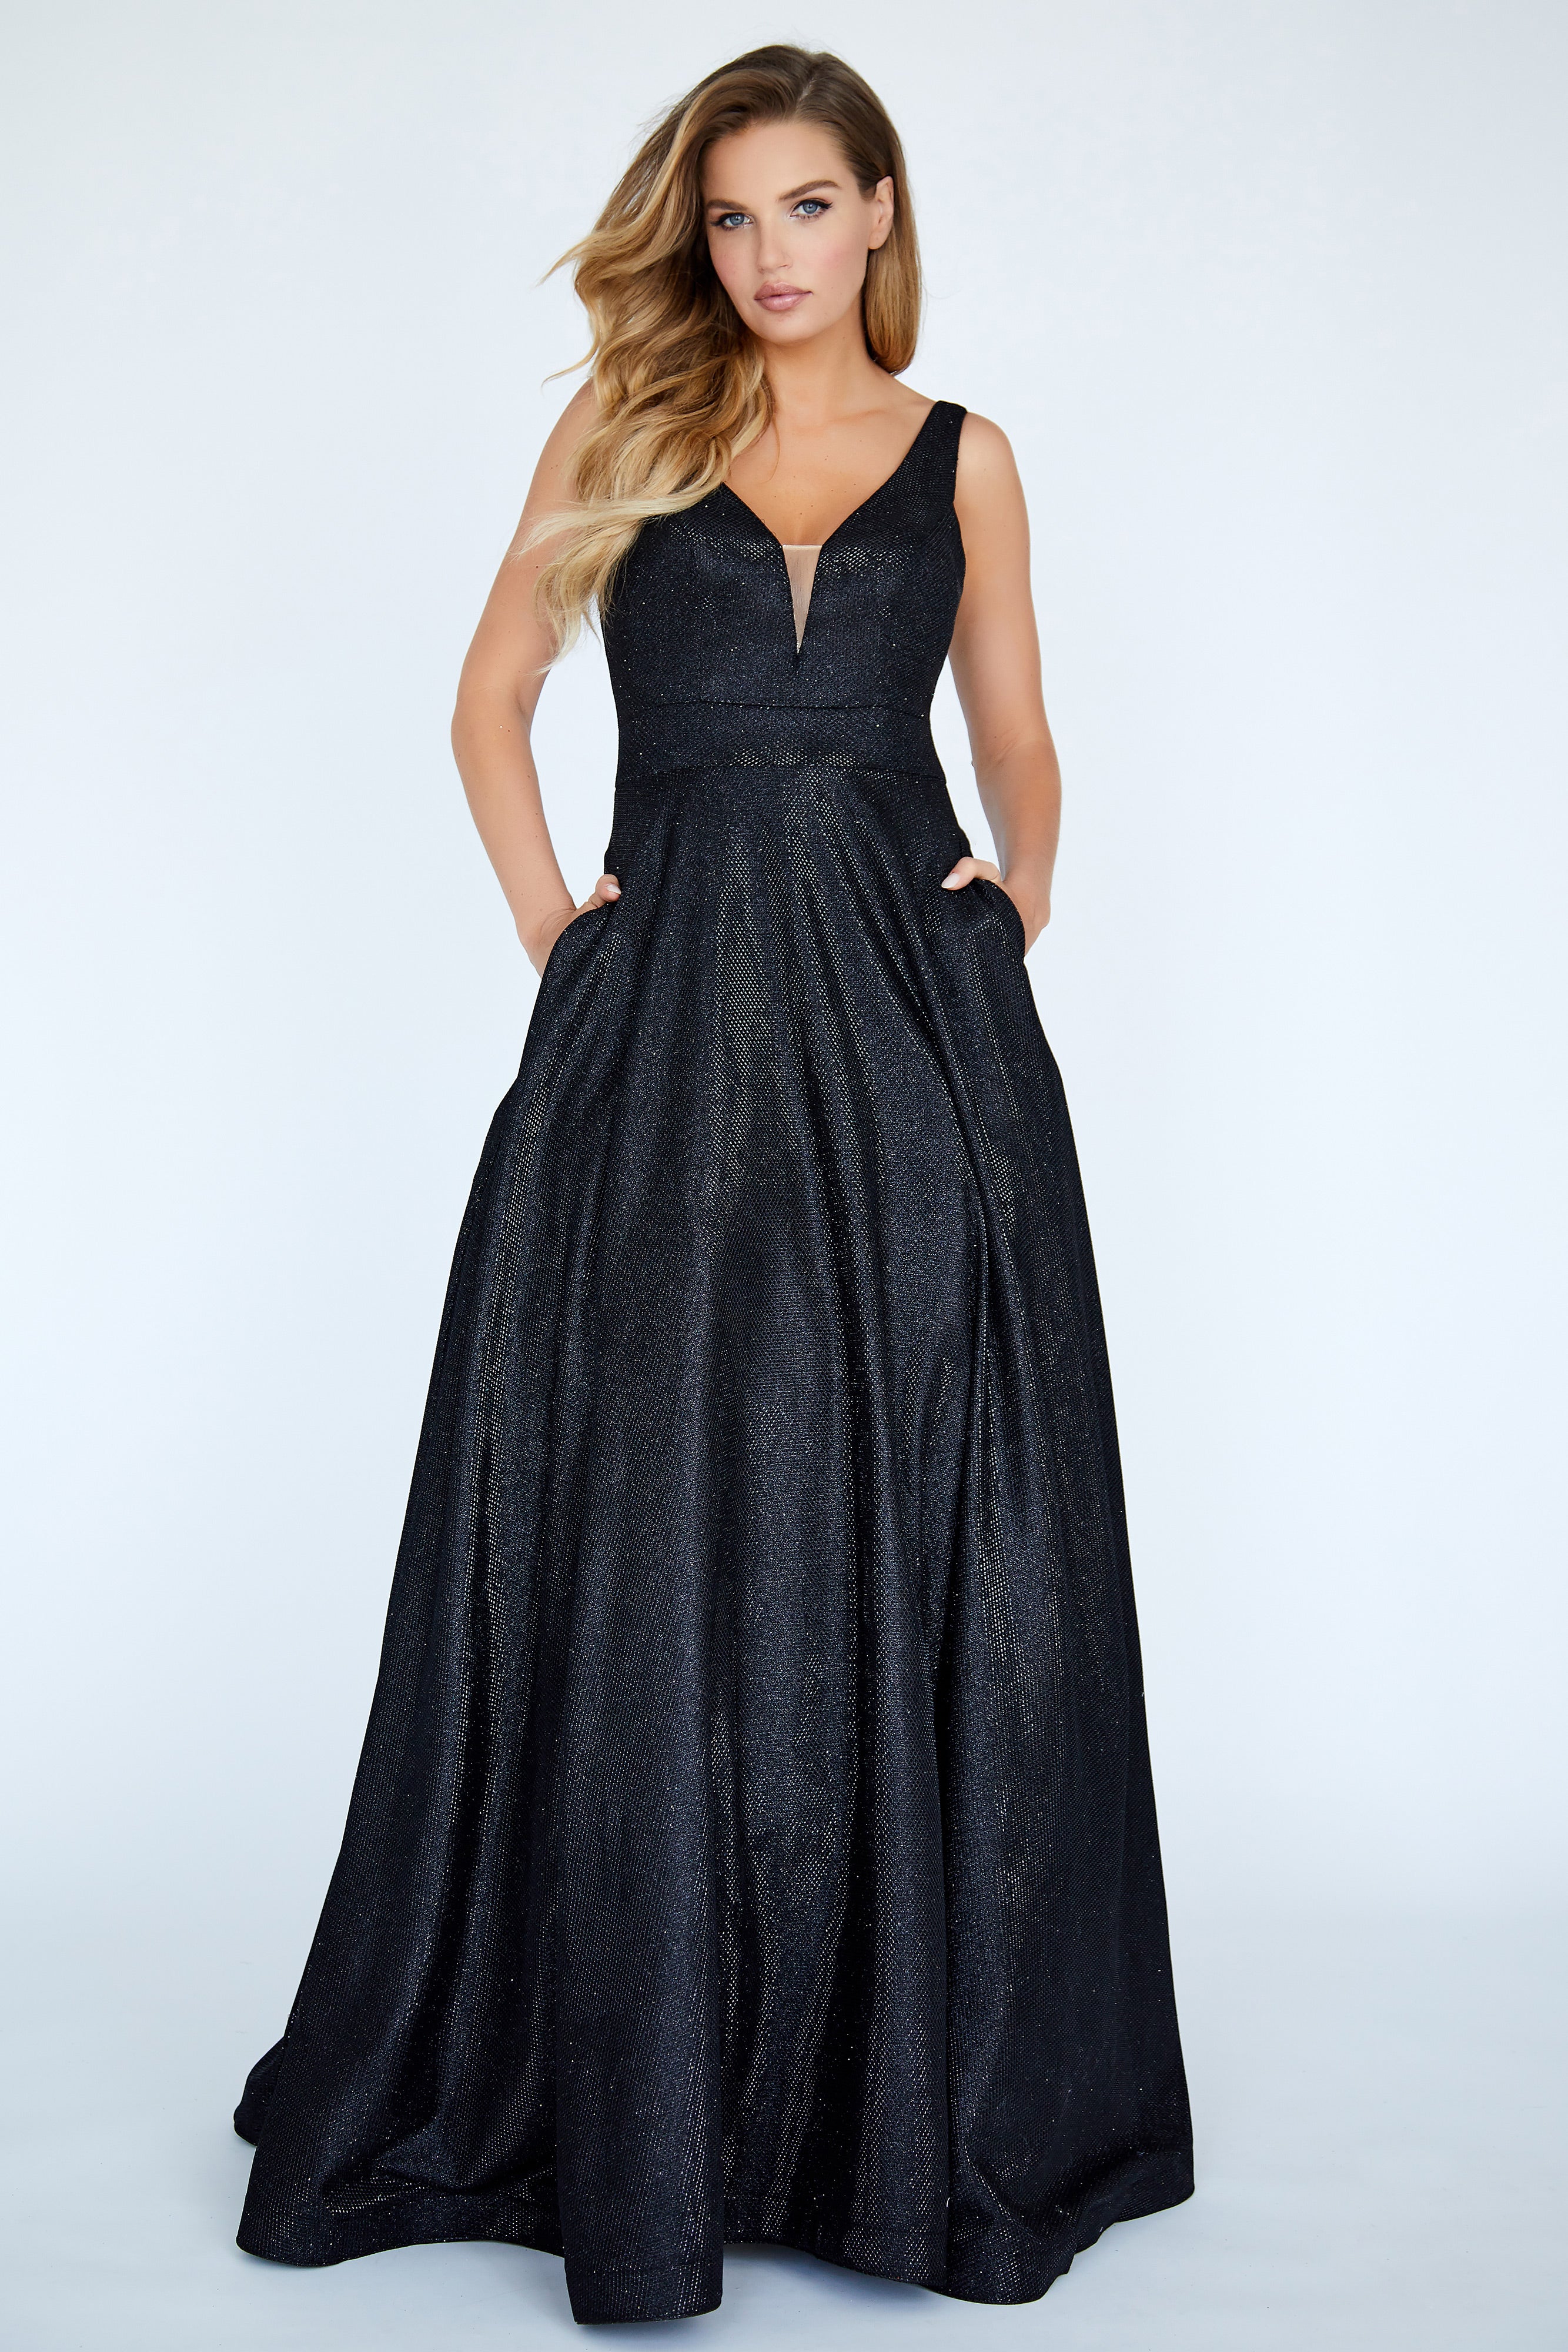 Lulwa Shimmer Dress in Black by Oh9shop | LEMONADE FASHION